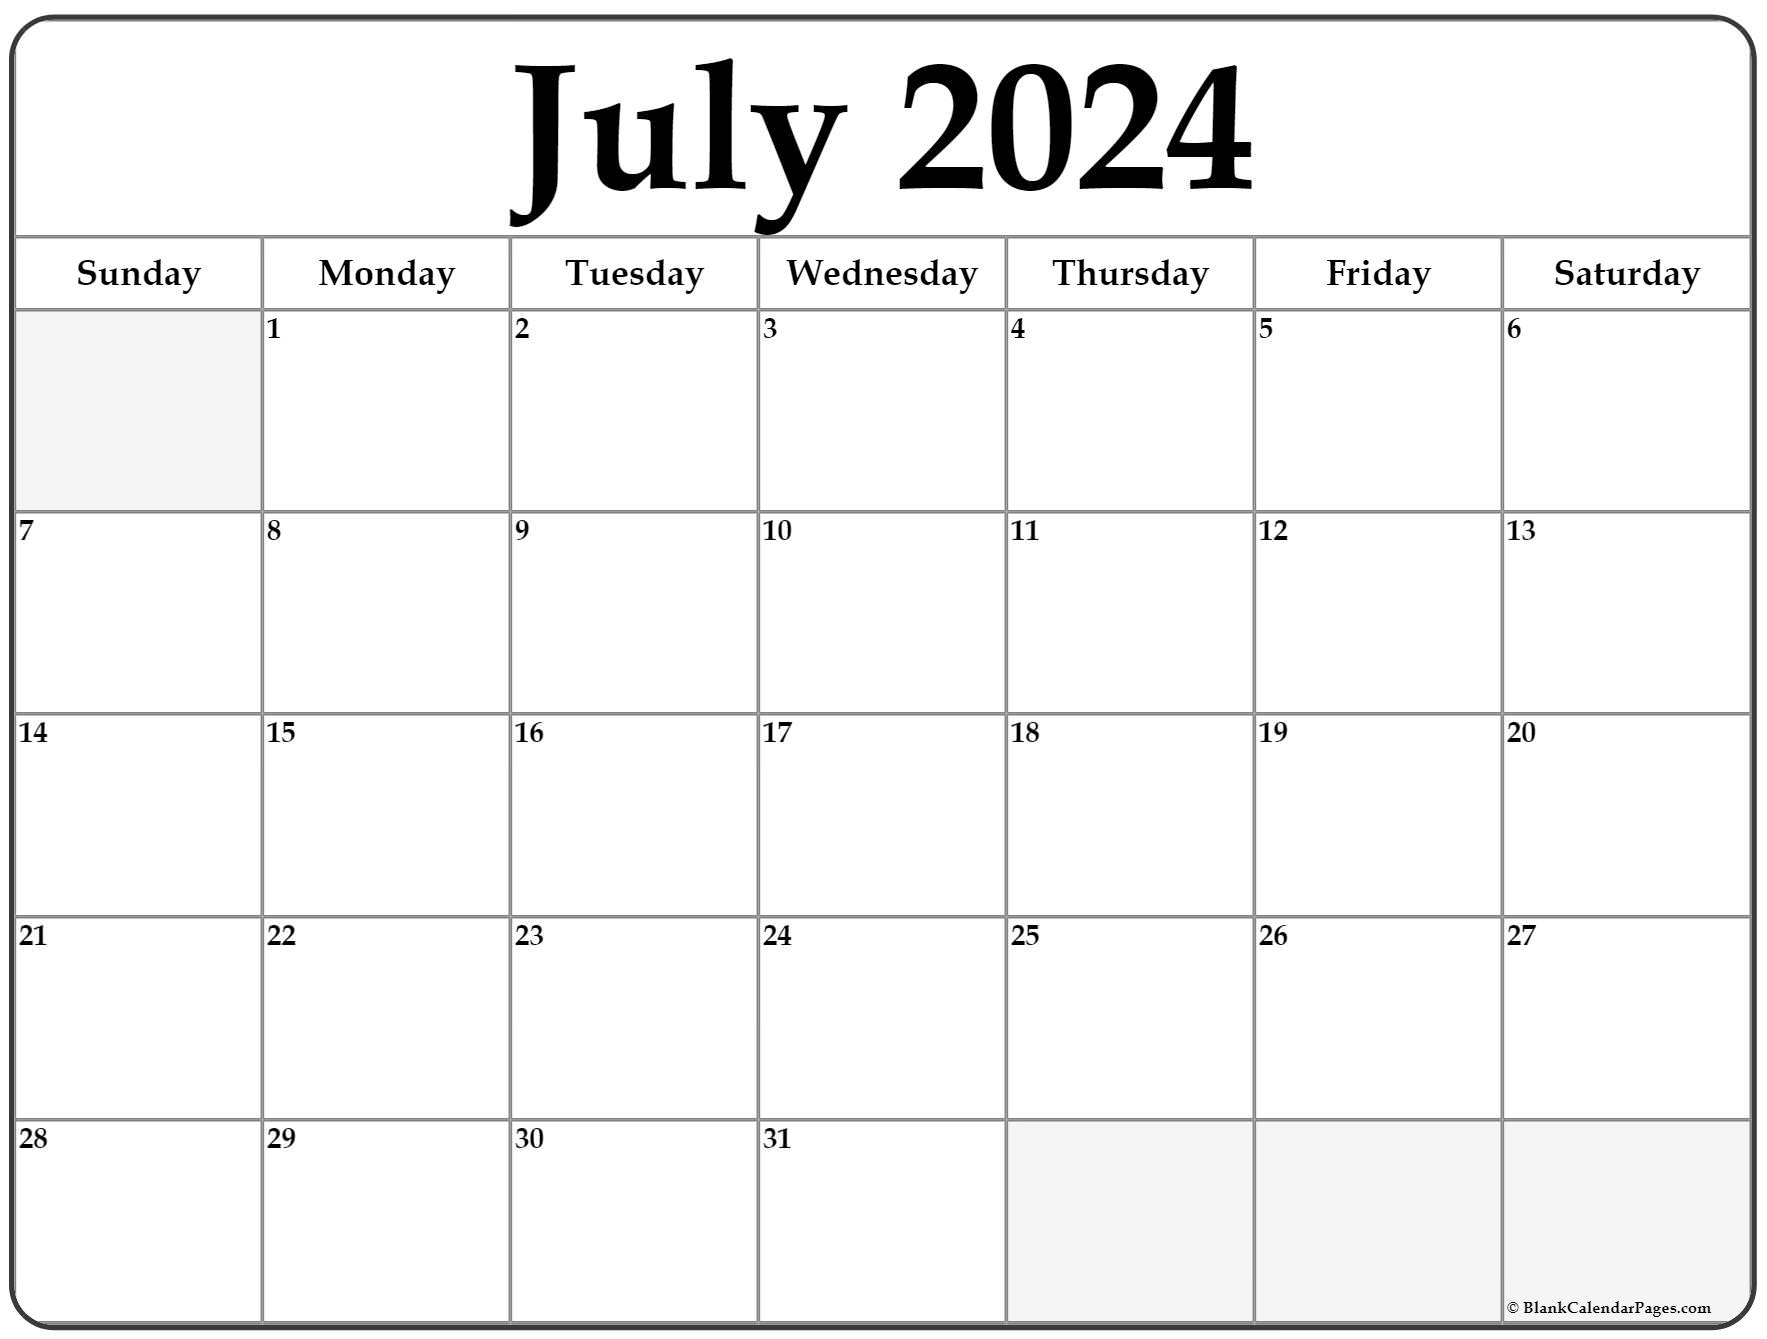 July 2024 Calendar | Free Printable Calendar for Summer 2024 Calendar Printable